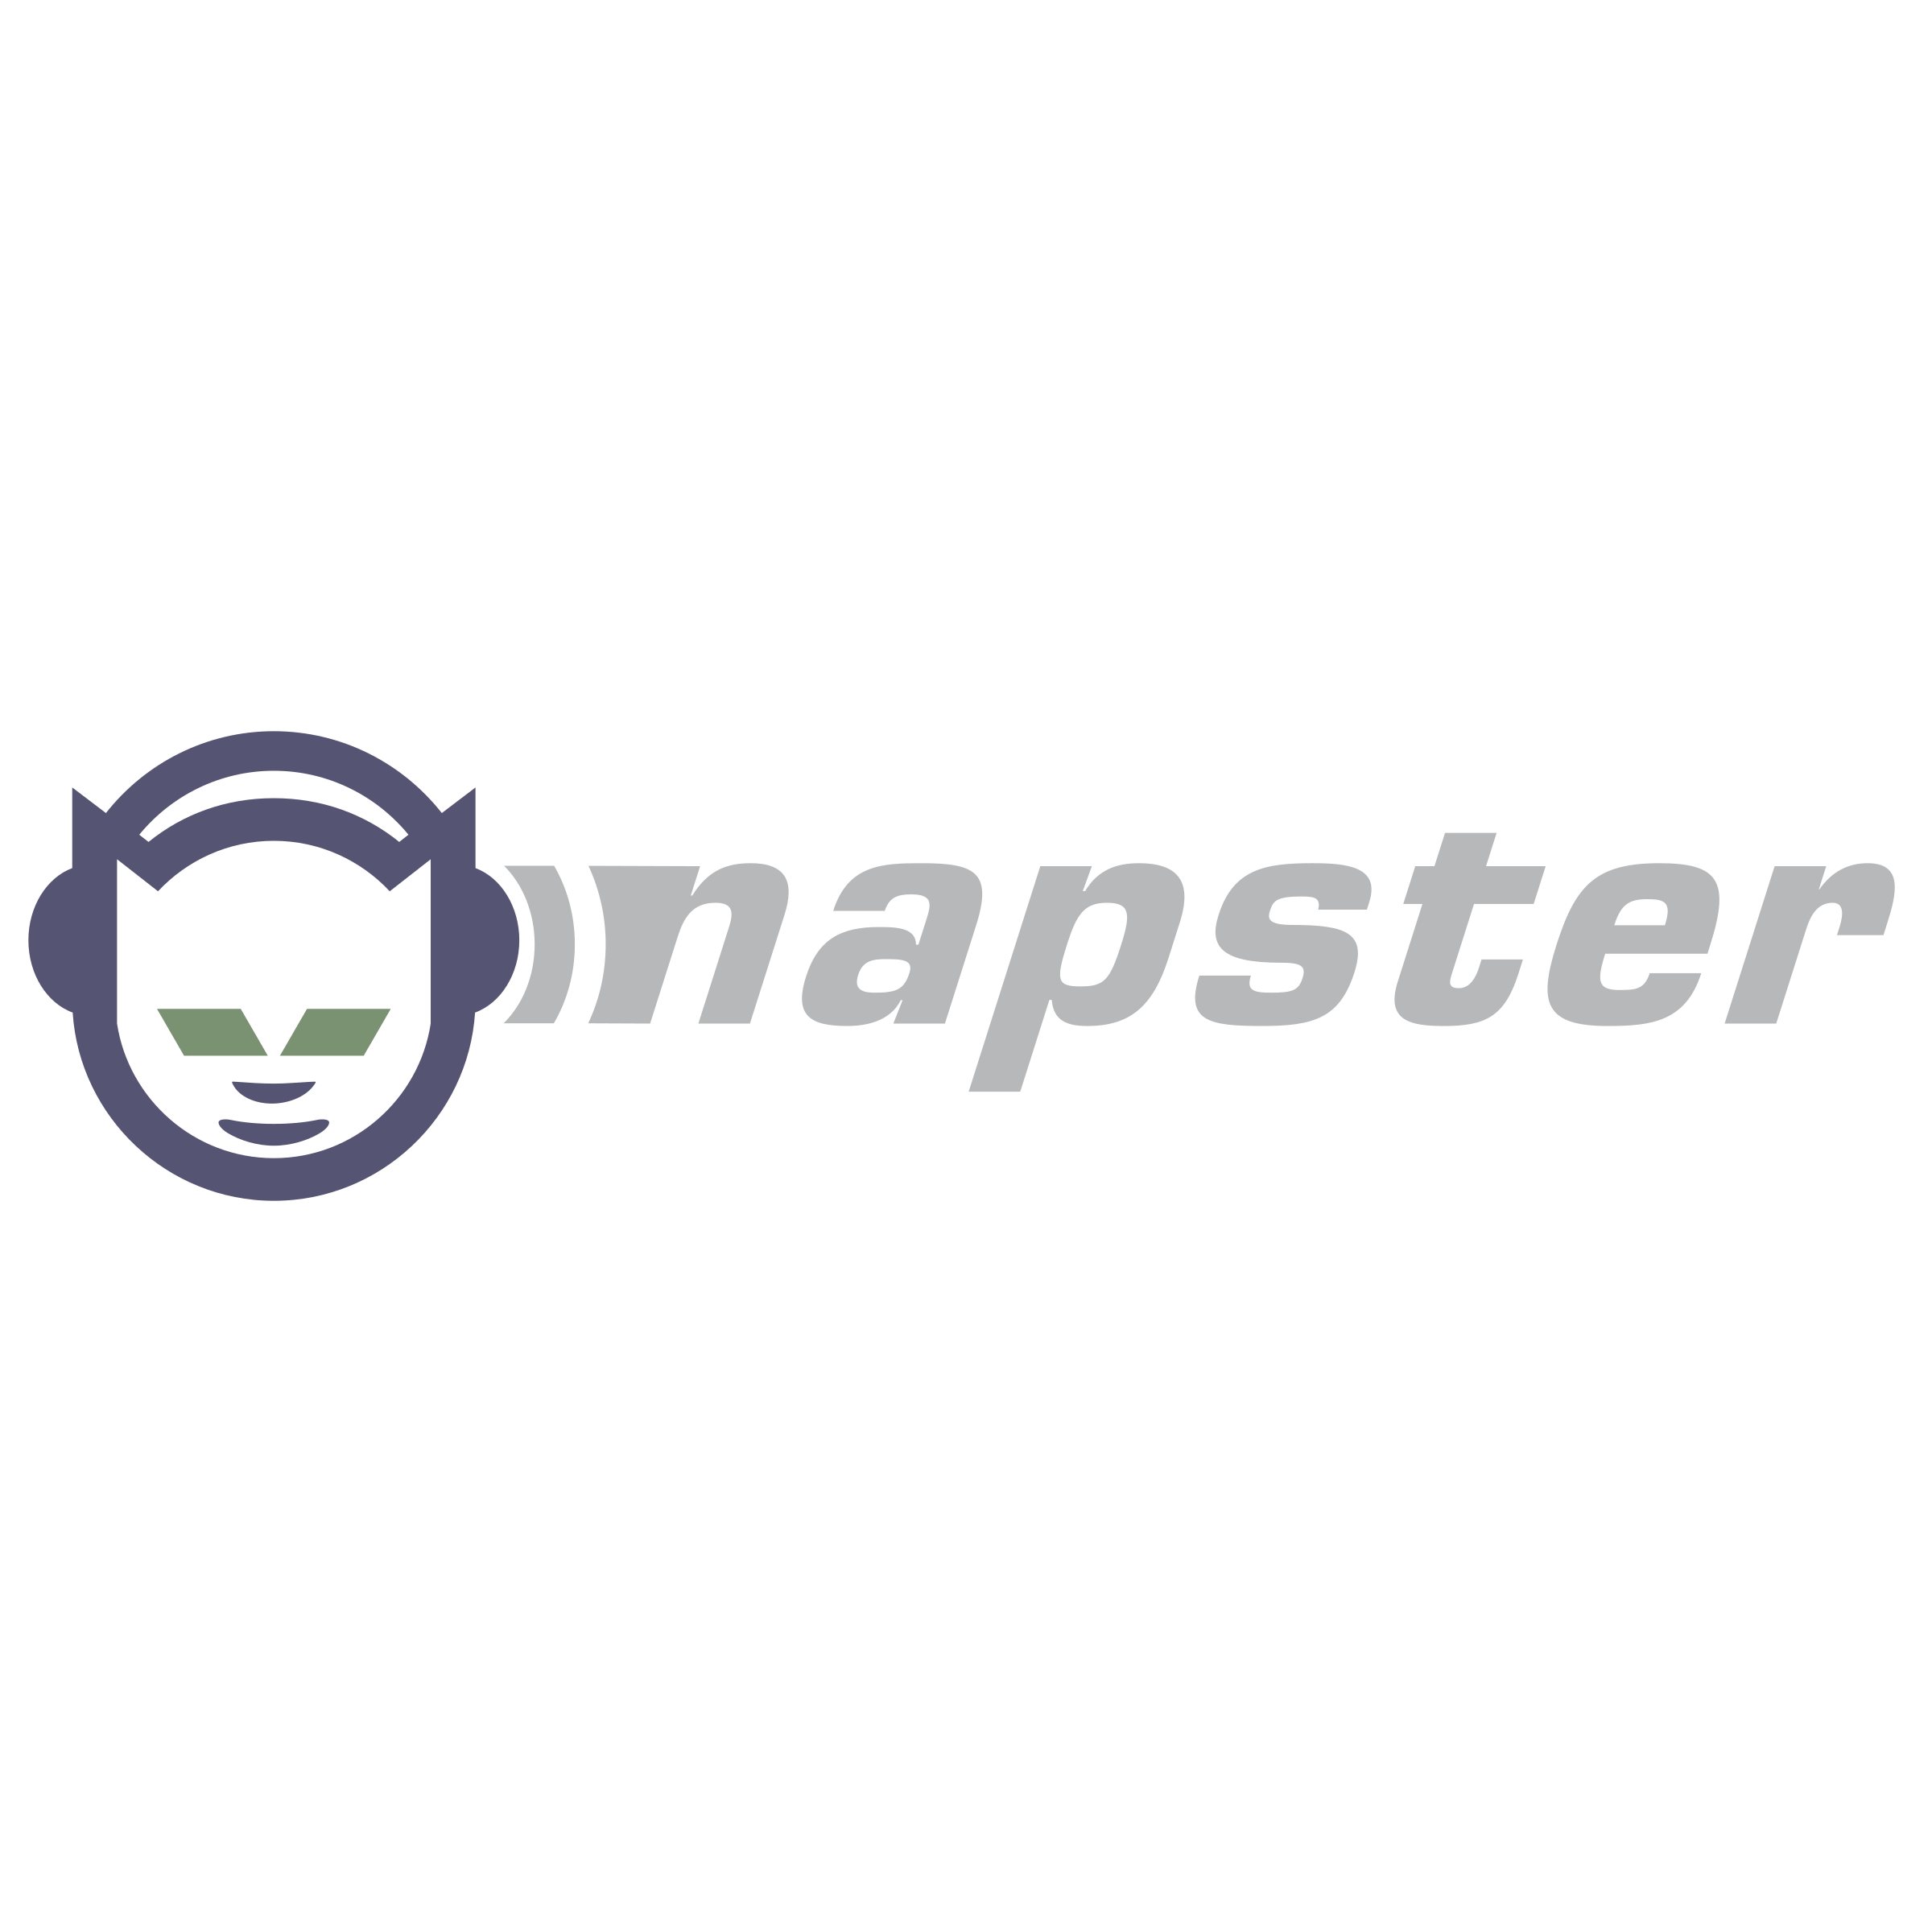 Napster Logo - Napster Logo PNG Transparent & SVG Vector - Freebie Supply